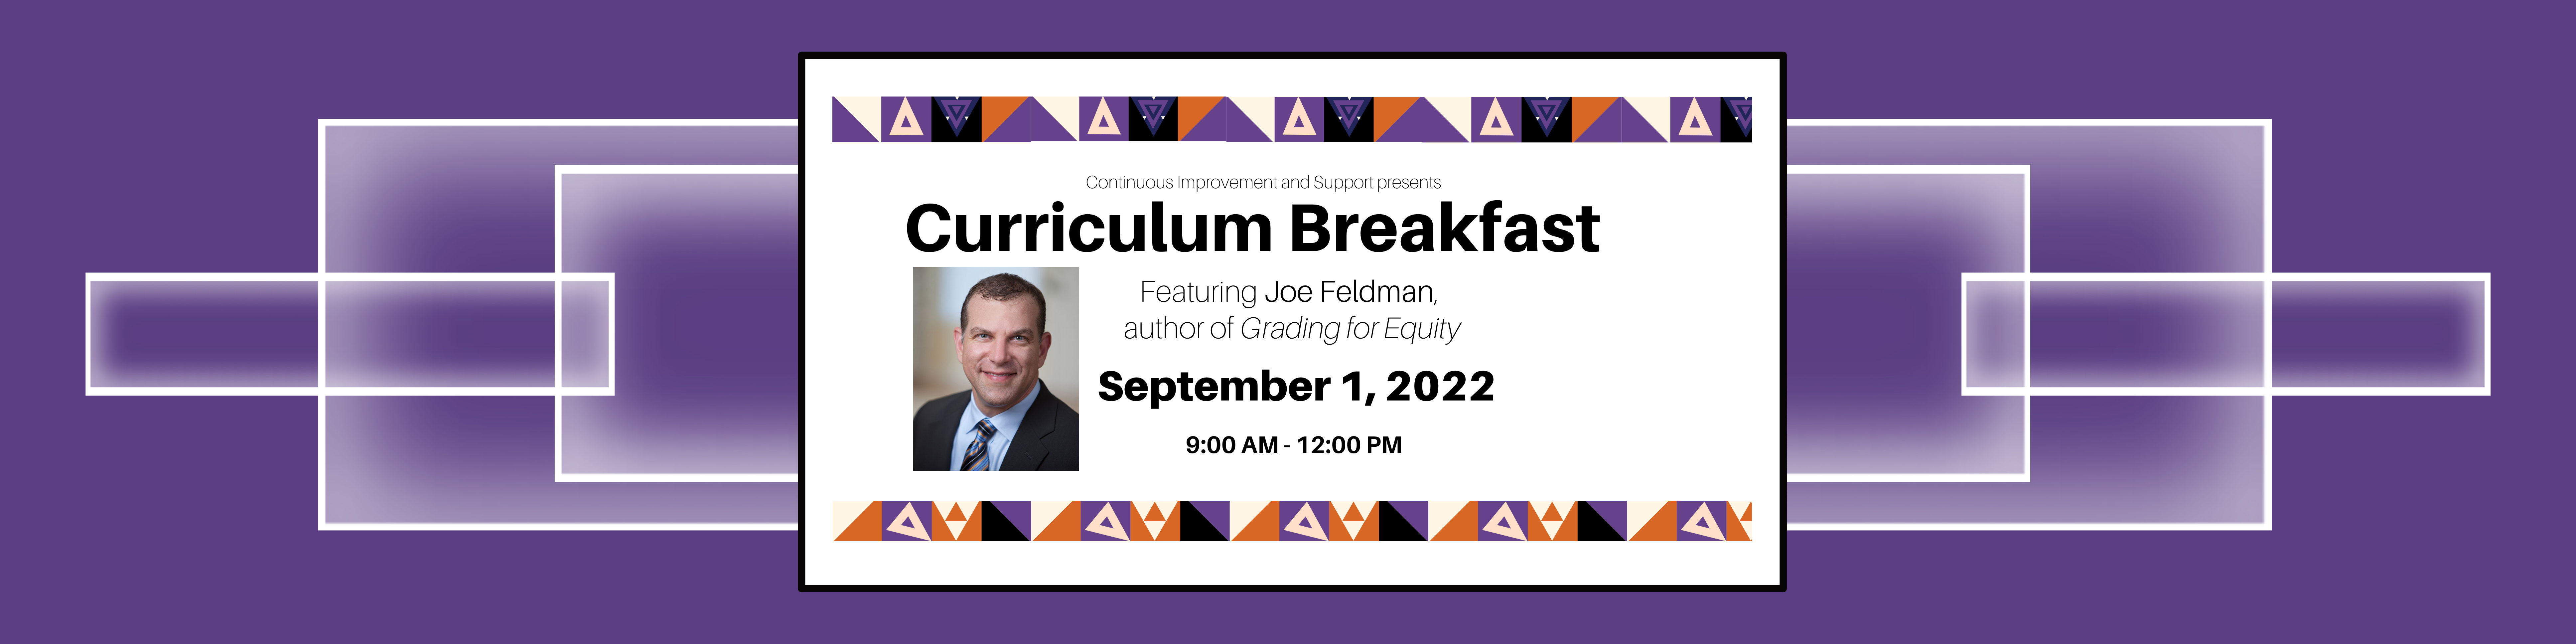 Curriculum Breakfast: Featuring Joe Feldman